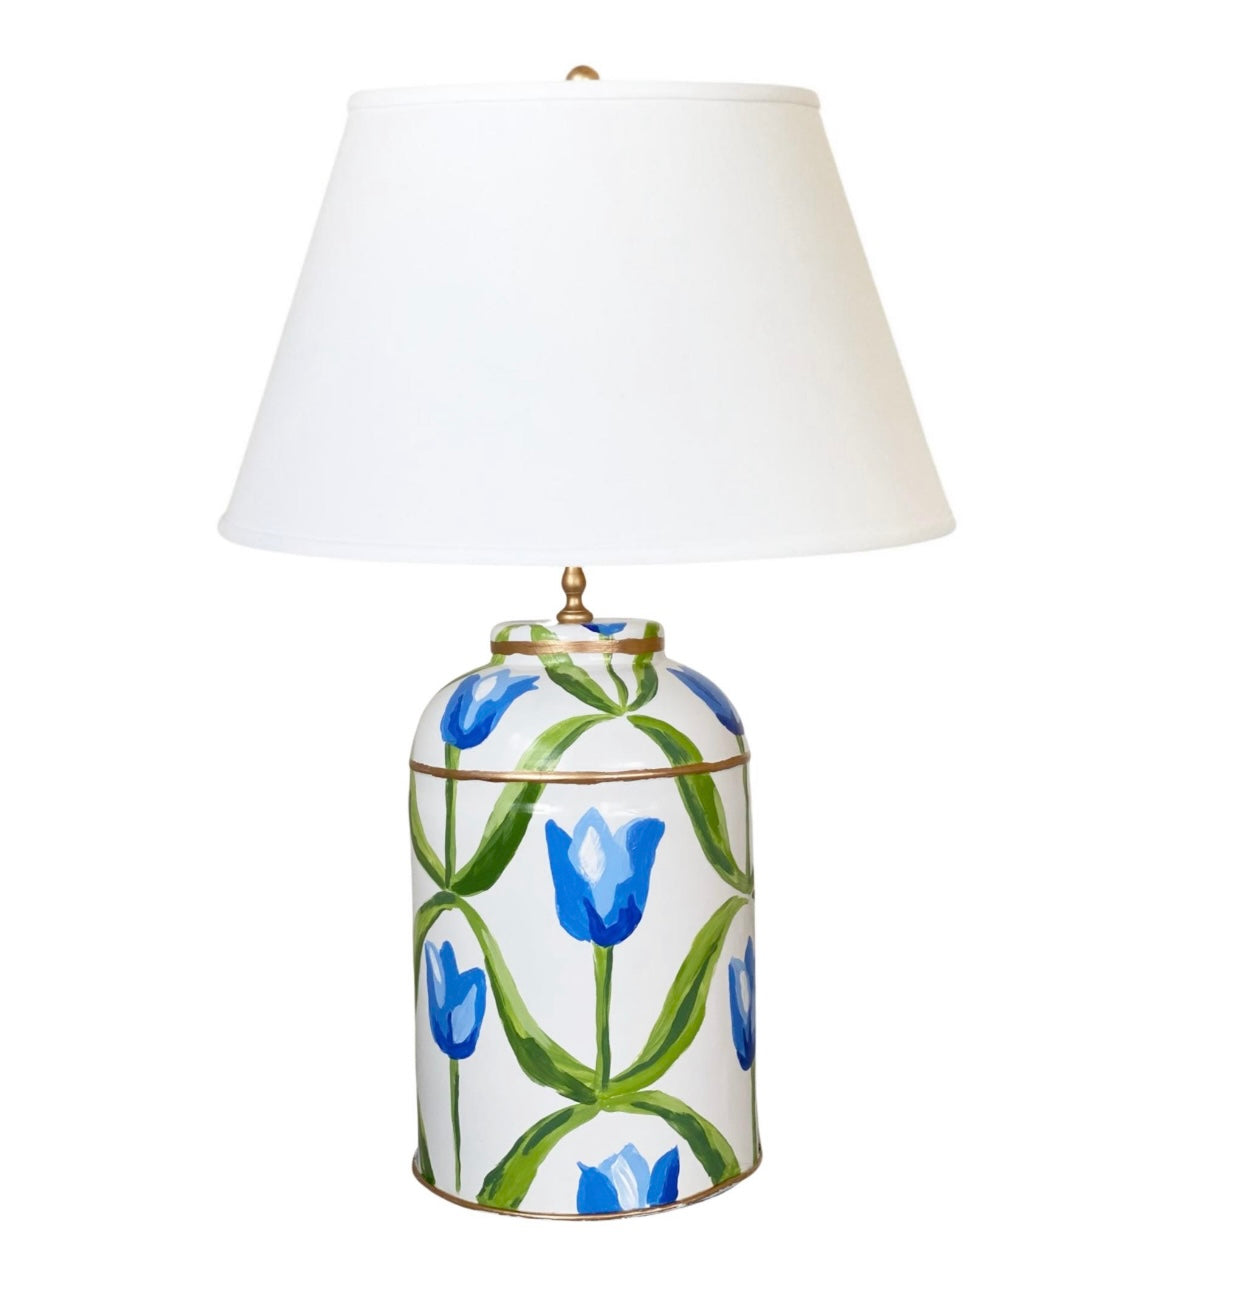 Blue Tulip in White Tea Caddy Lamp